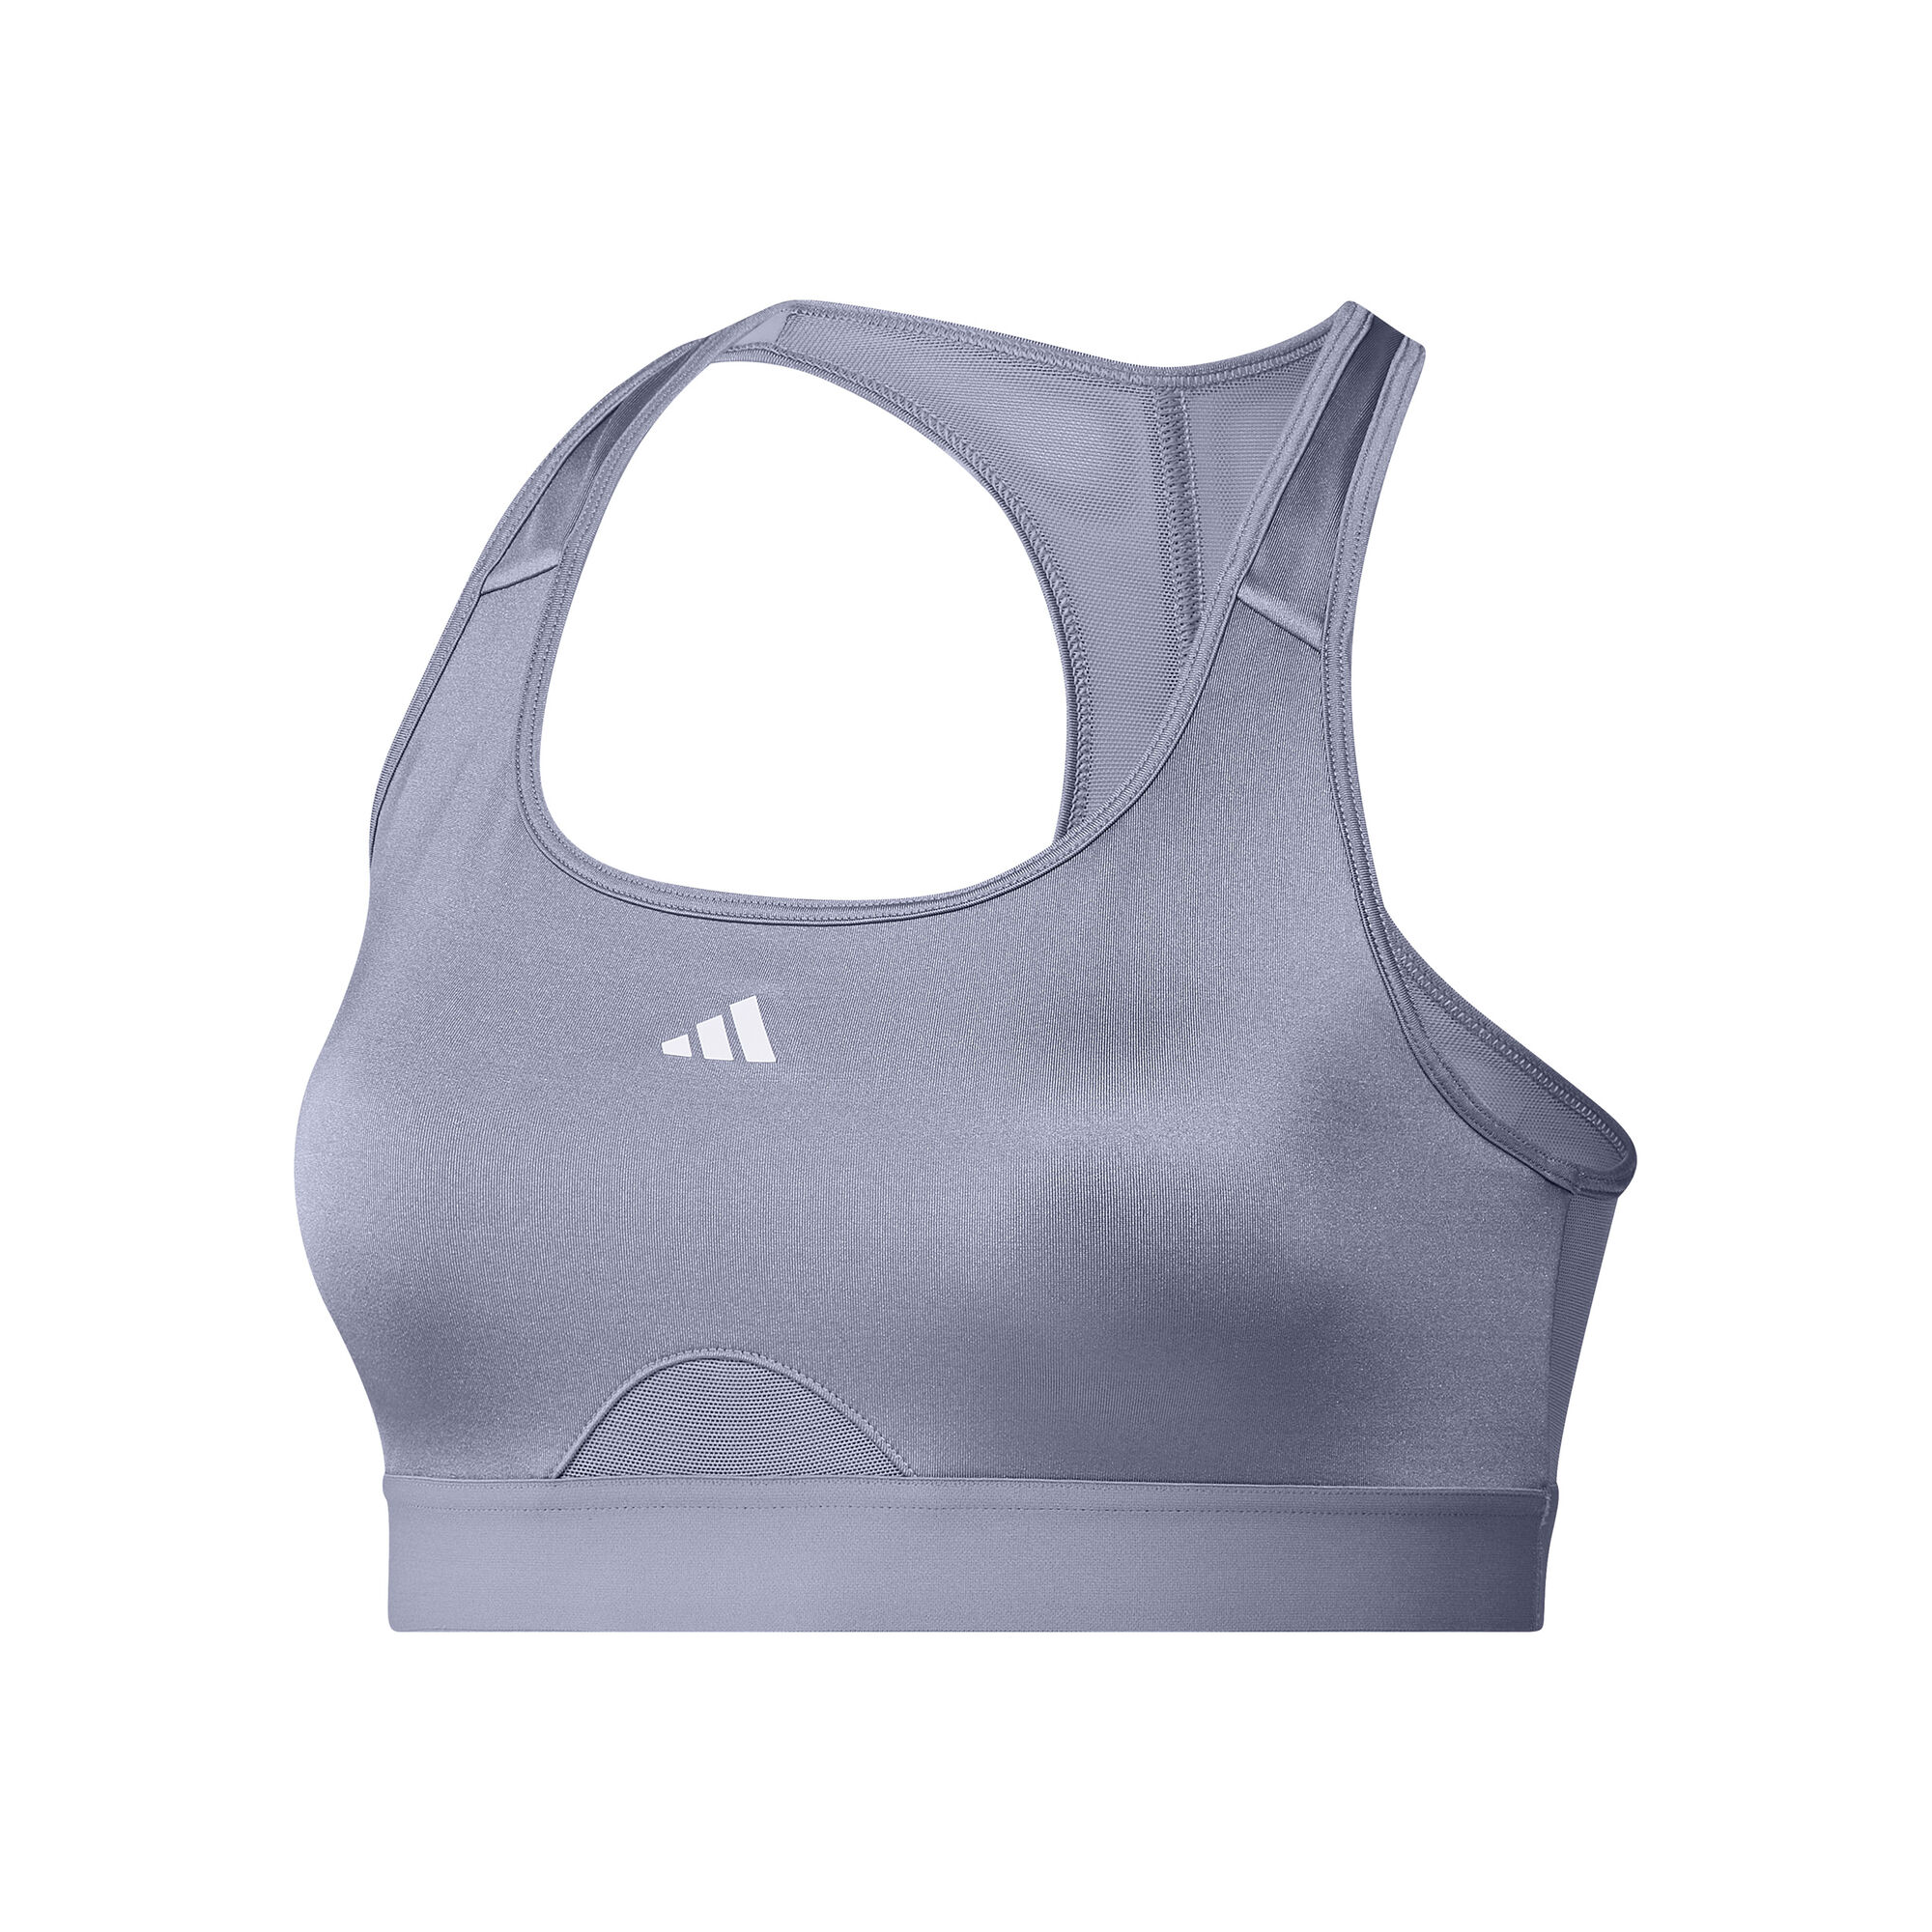 adidas Sports bra POWERREACT TRAINING in white